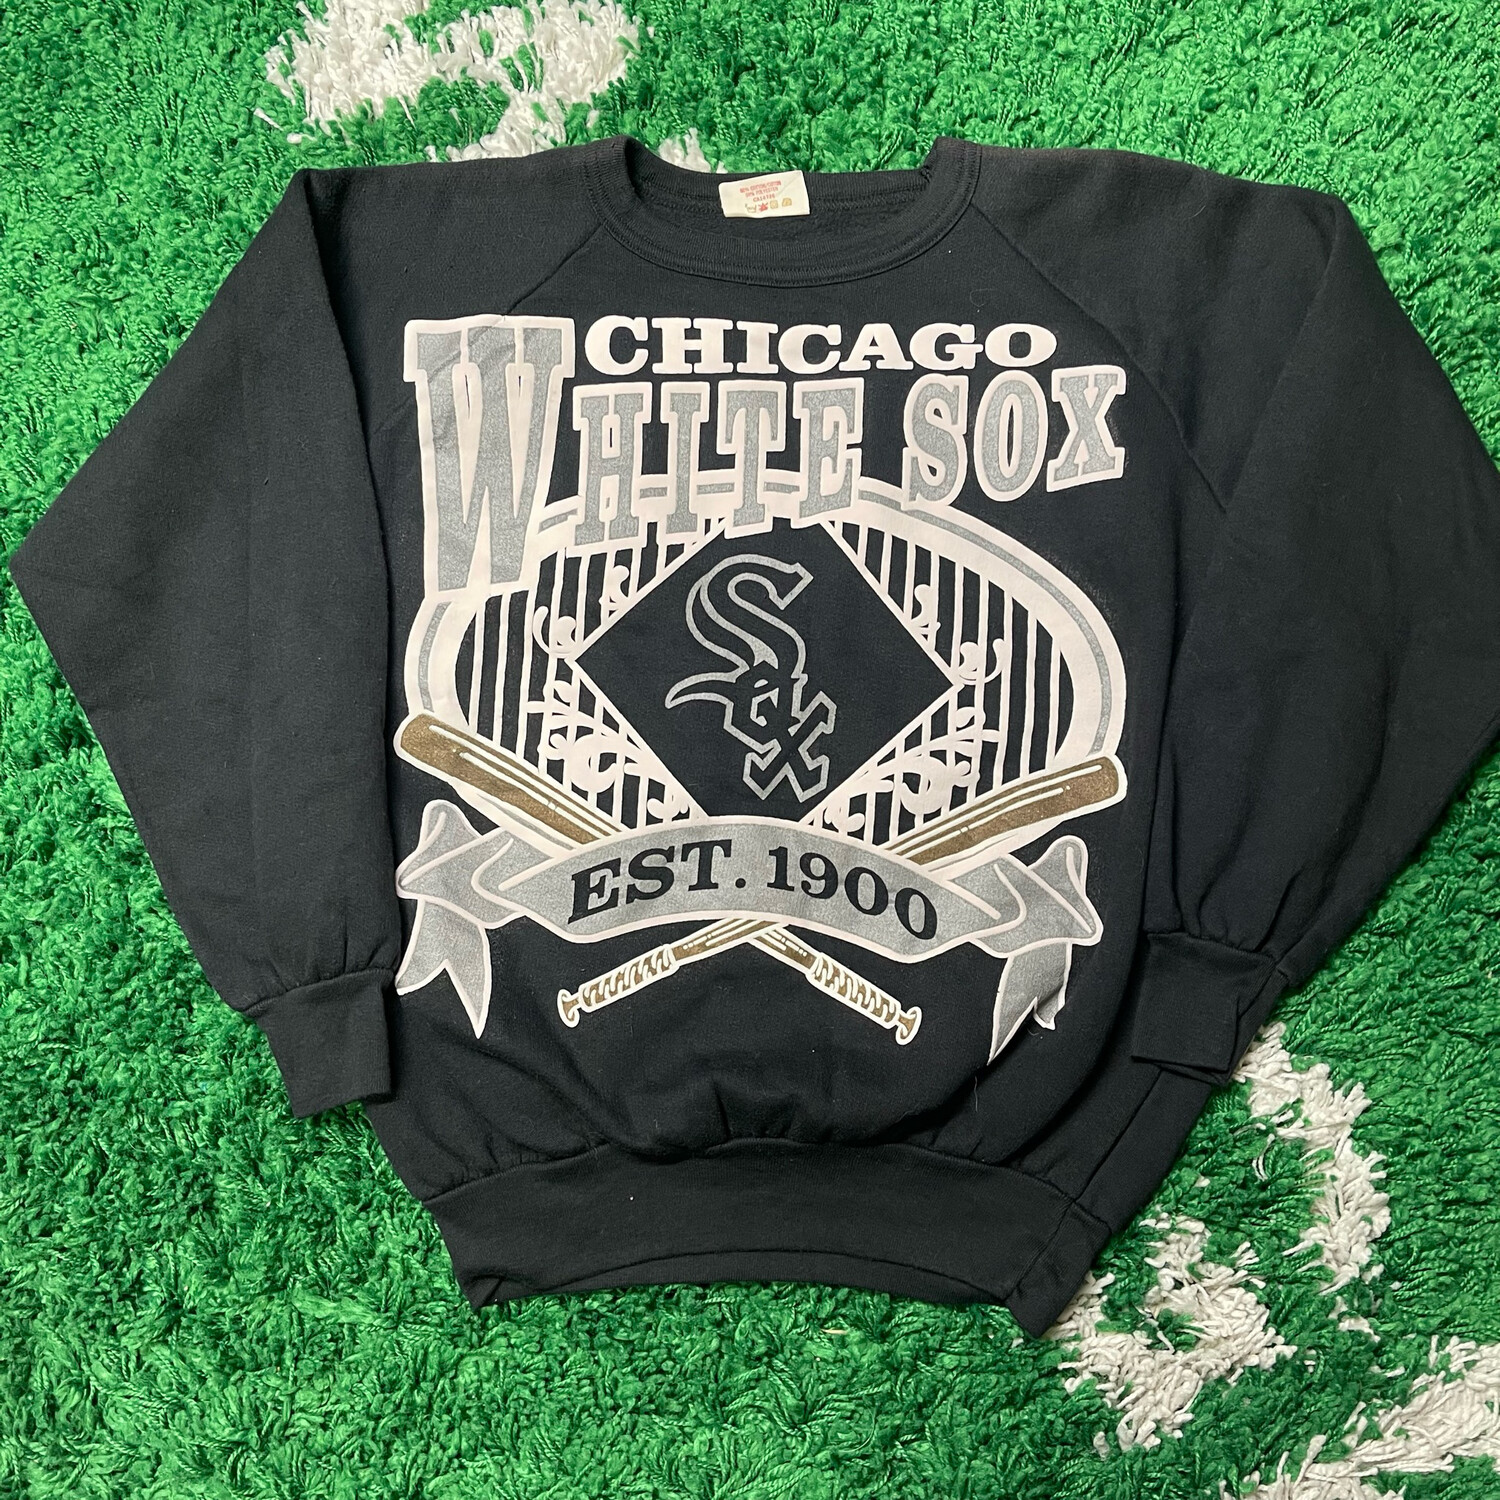 Chicago White Sox Crewneck Sweater Size XS